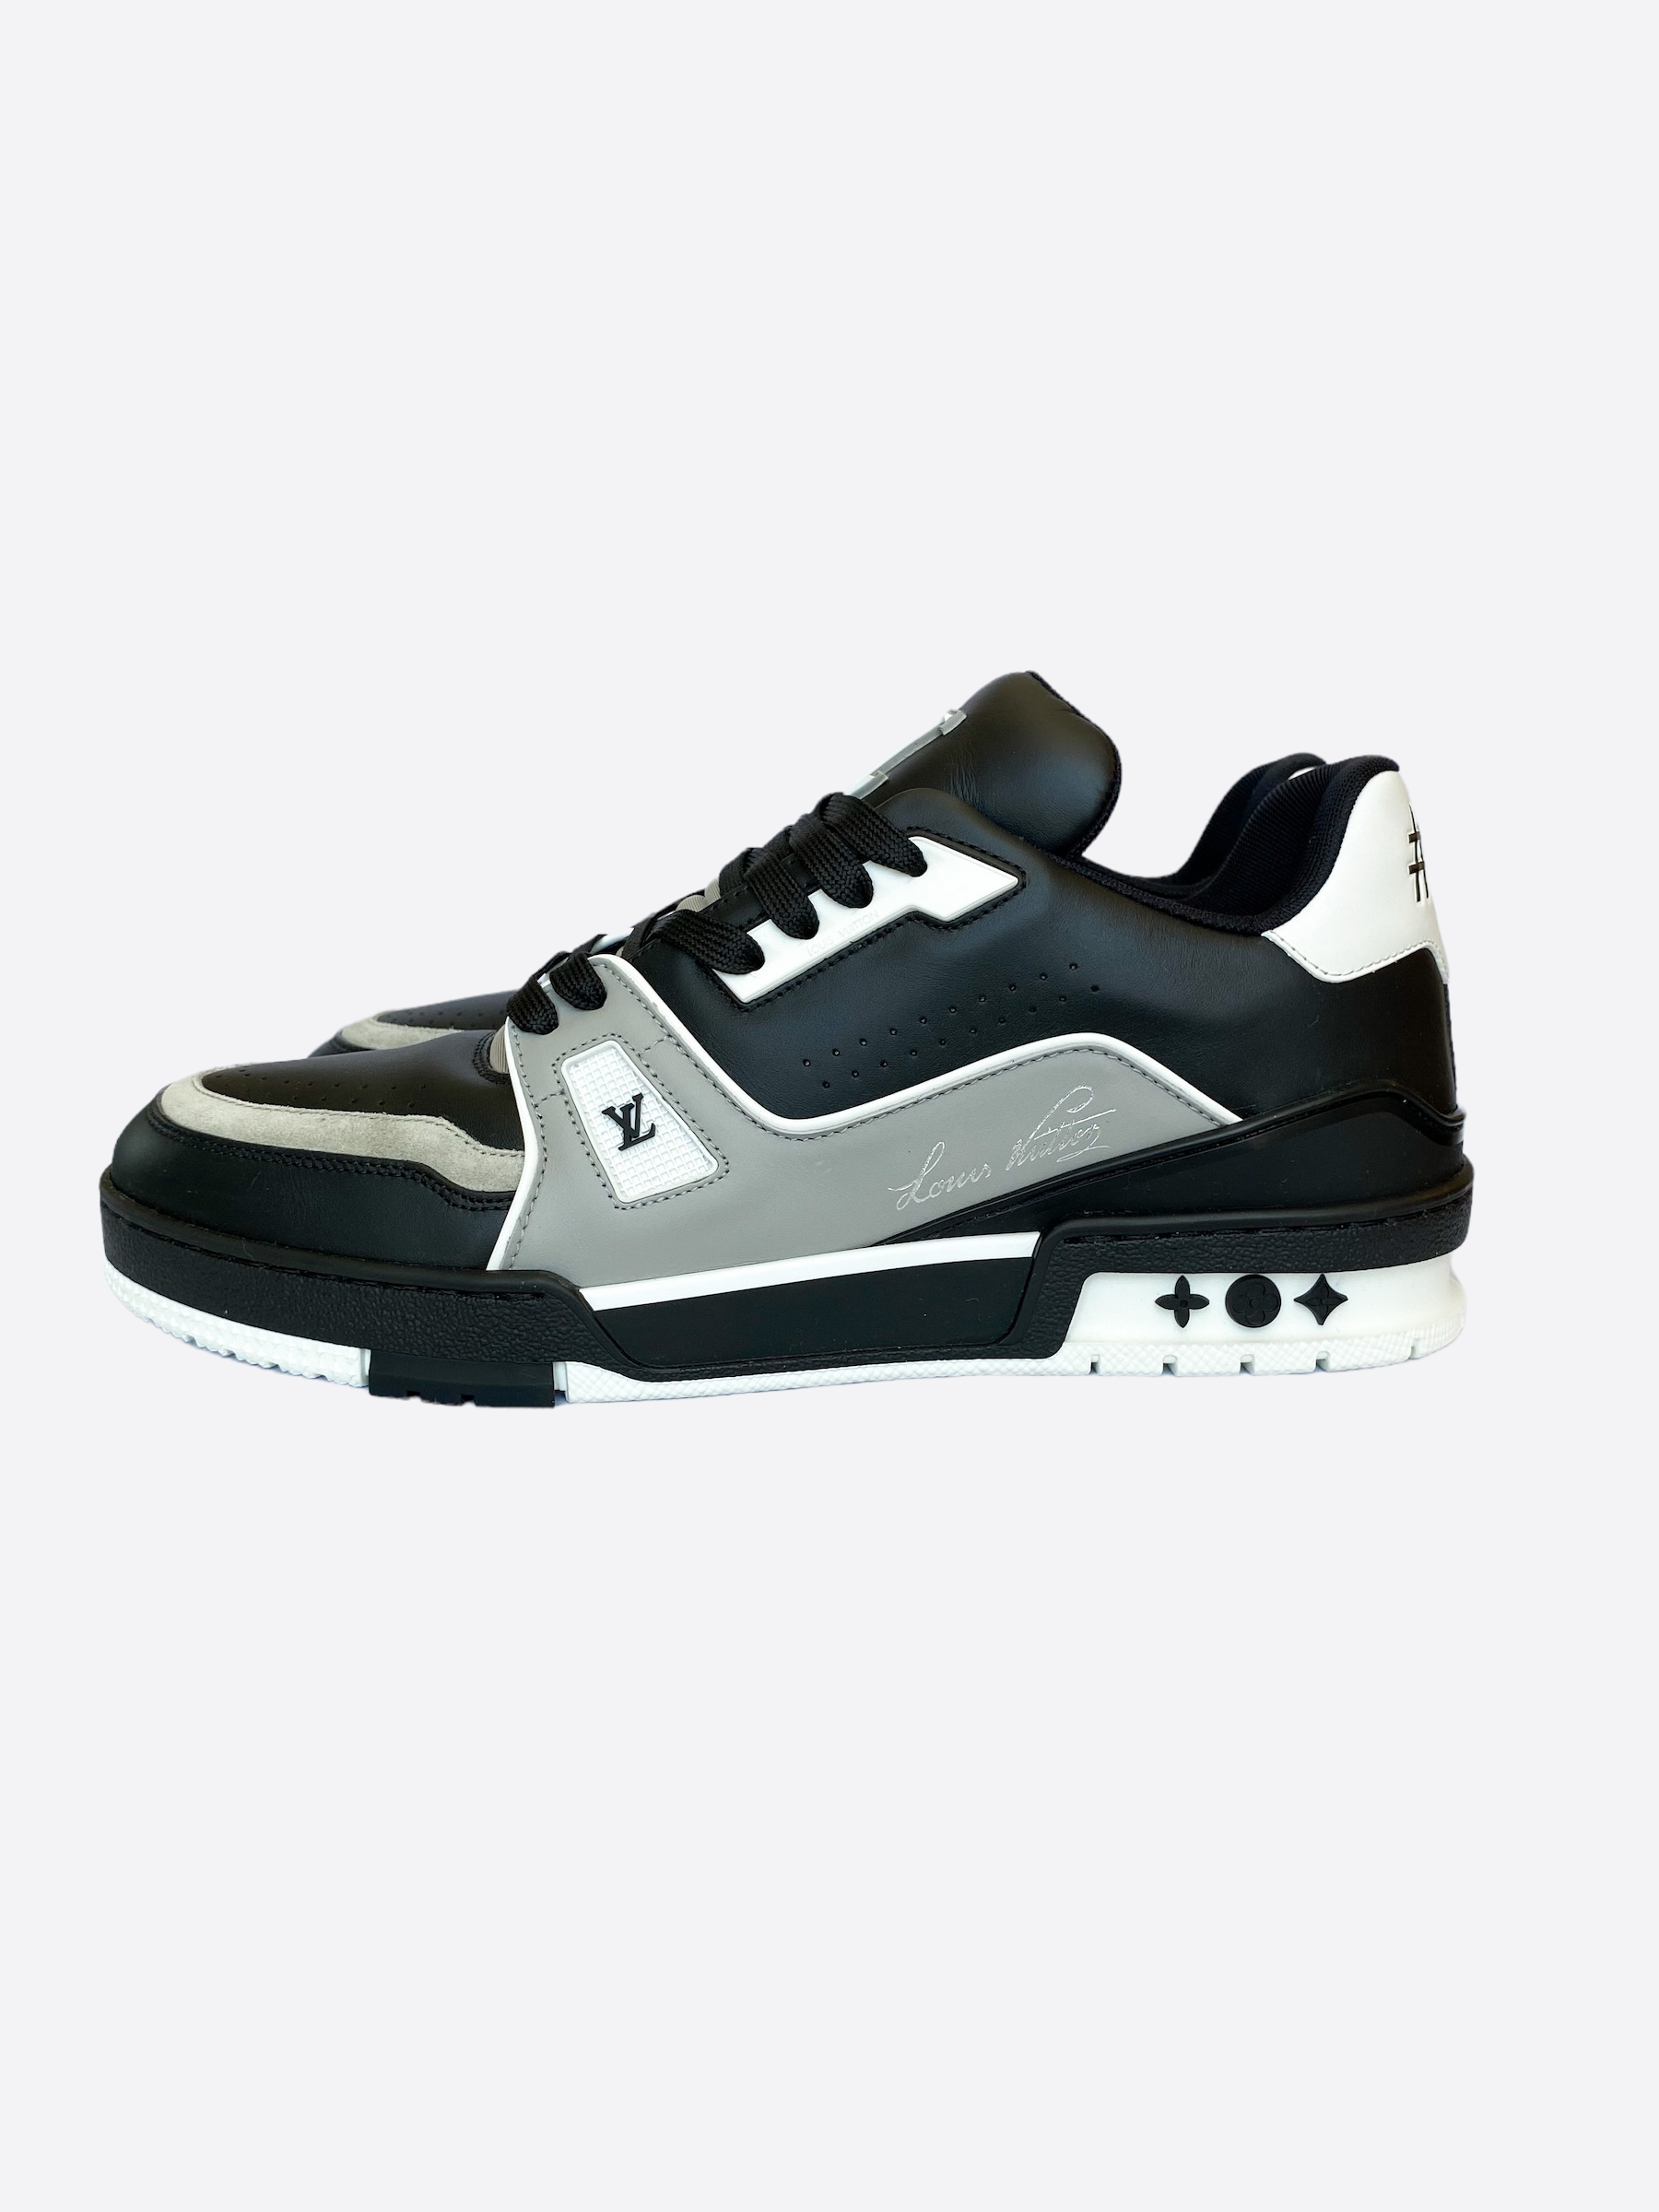 grey louis vuitton trainer sneaker